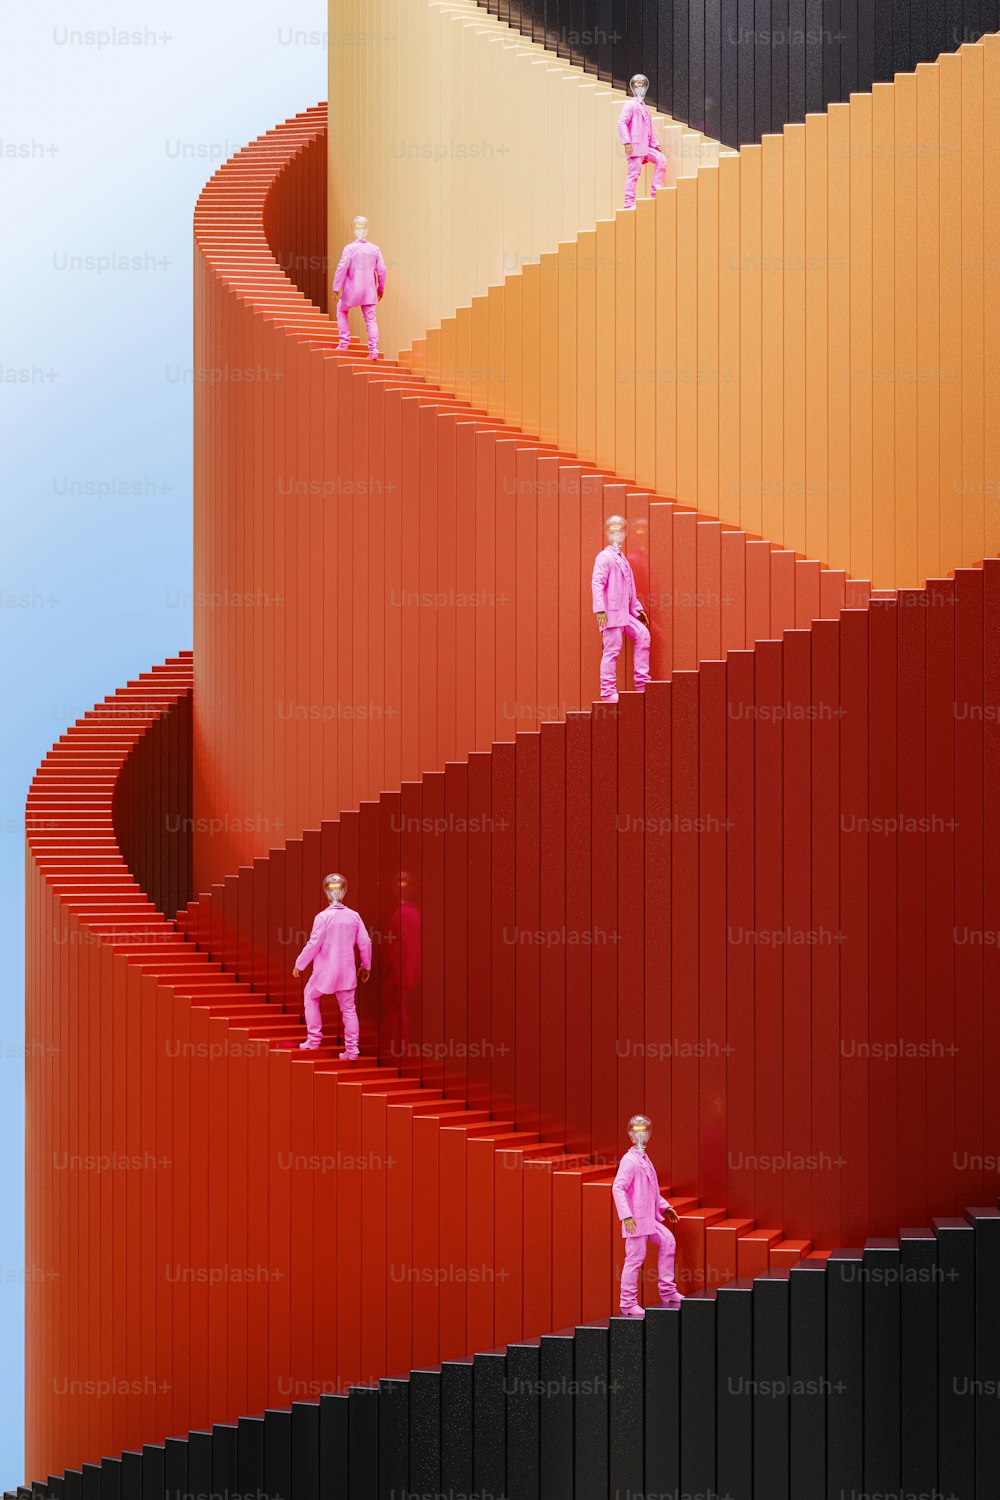 Un gruppo di persone in piedi in cima a una scala rossa